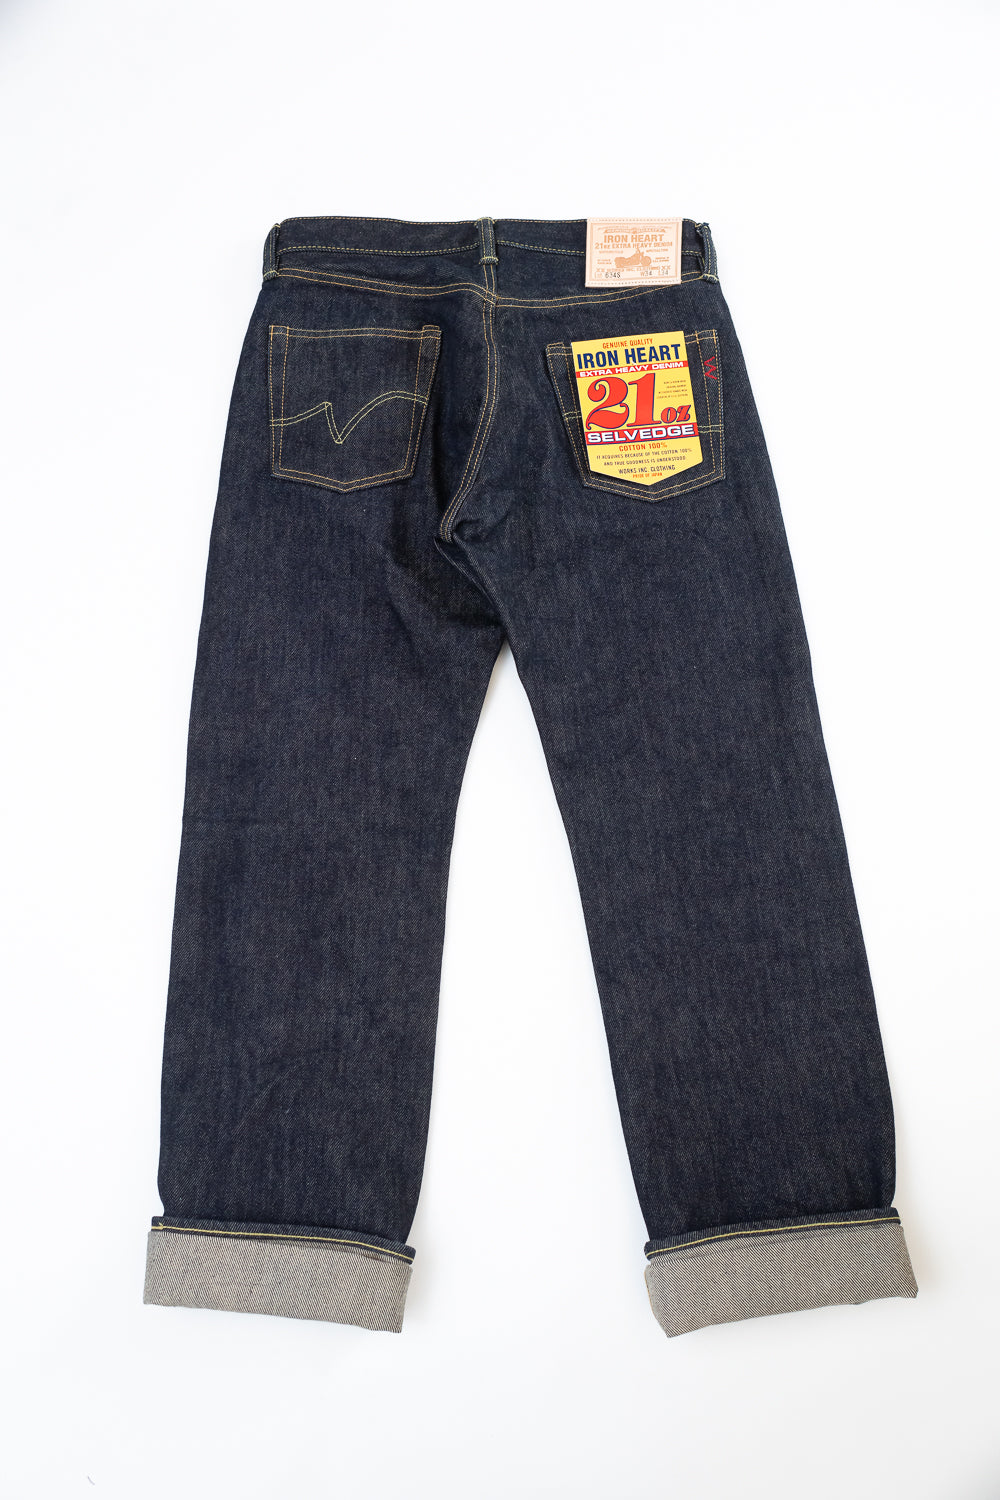 IH-634S-21 - 21oz Selvedge Denim Straight Cut Jeans - Indigo